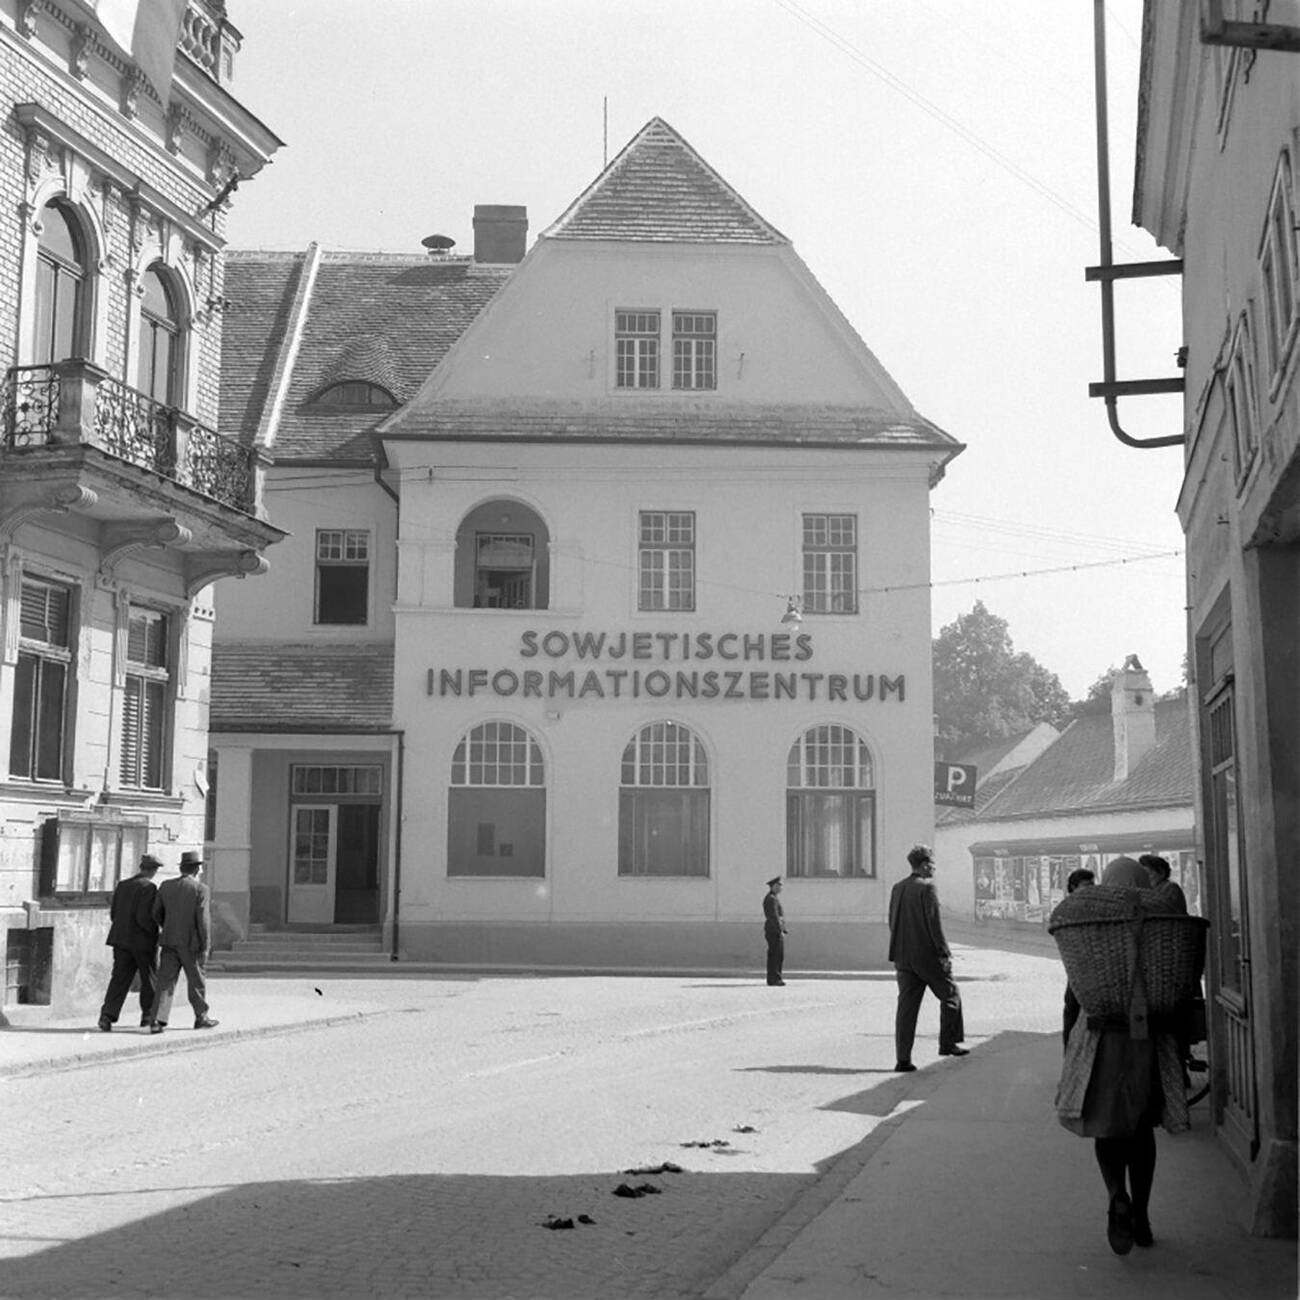 The former Hotel Weisse Rose, Franz-Liszt-Gasse 1 (later Schwechaterhof), as a Soviet information center in Eisenstadt, April 1953